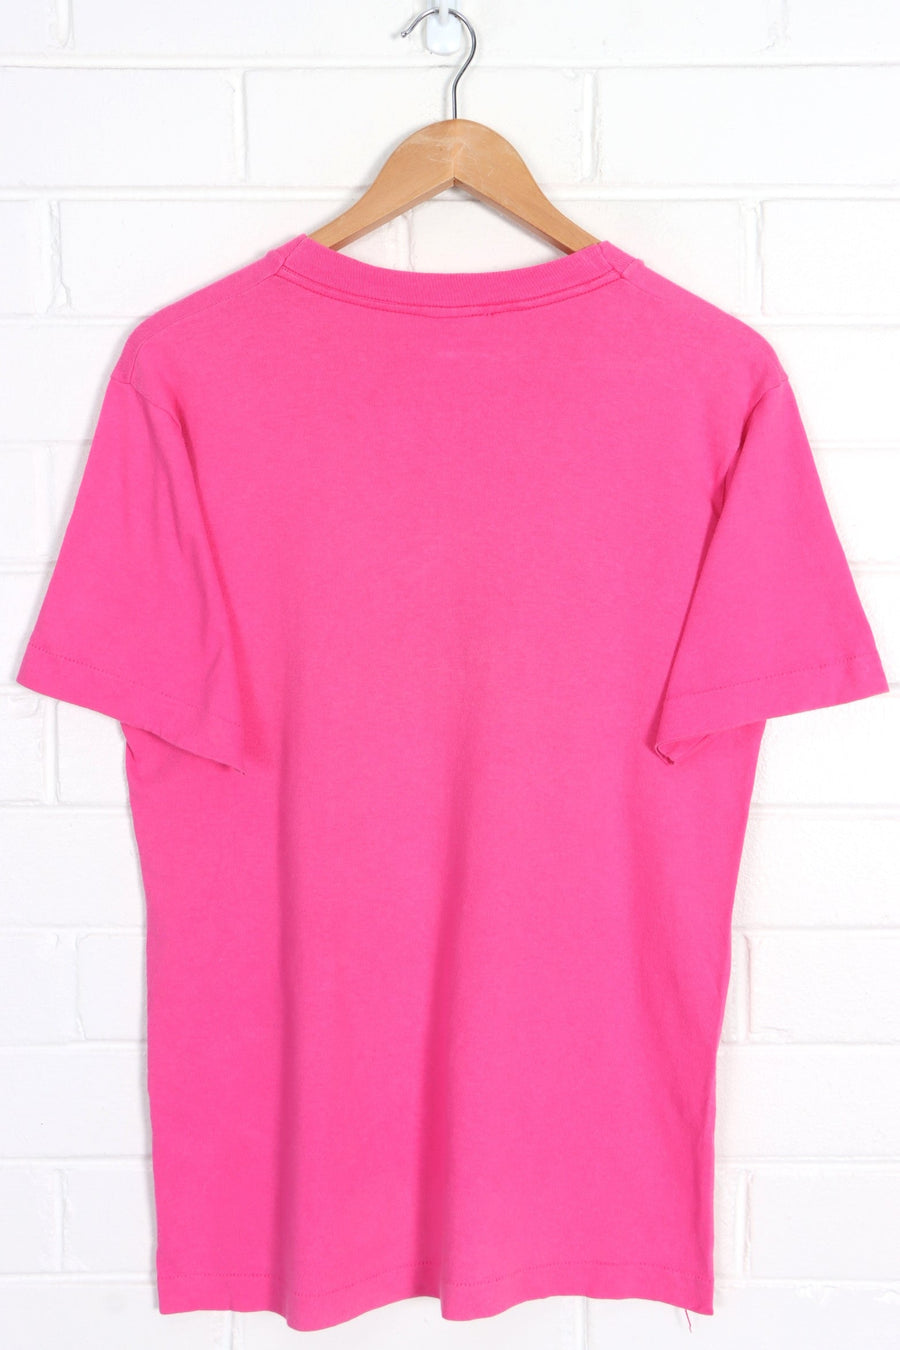 DISNEY Polynesian Resort Pink Single Stitch T-Shirt USA Made (S)